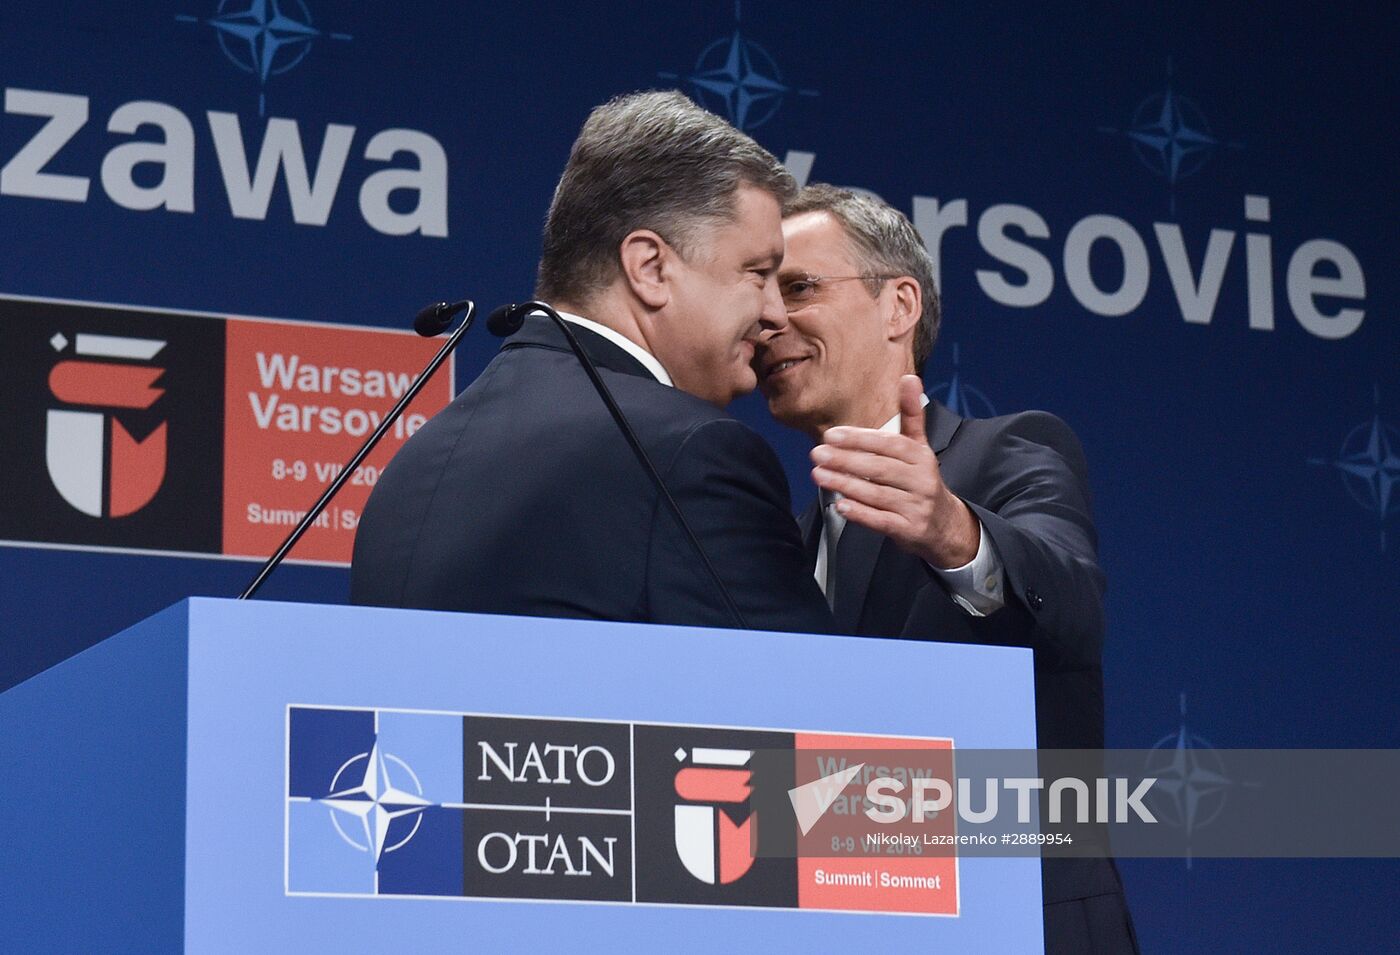 NATO Summit in Warsaw. Day 2